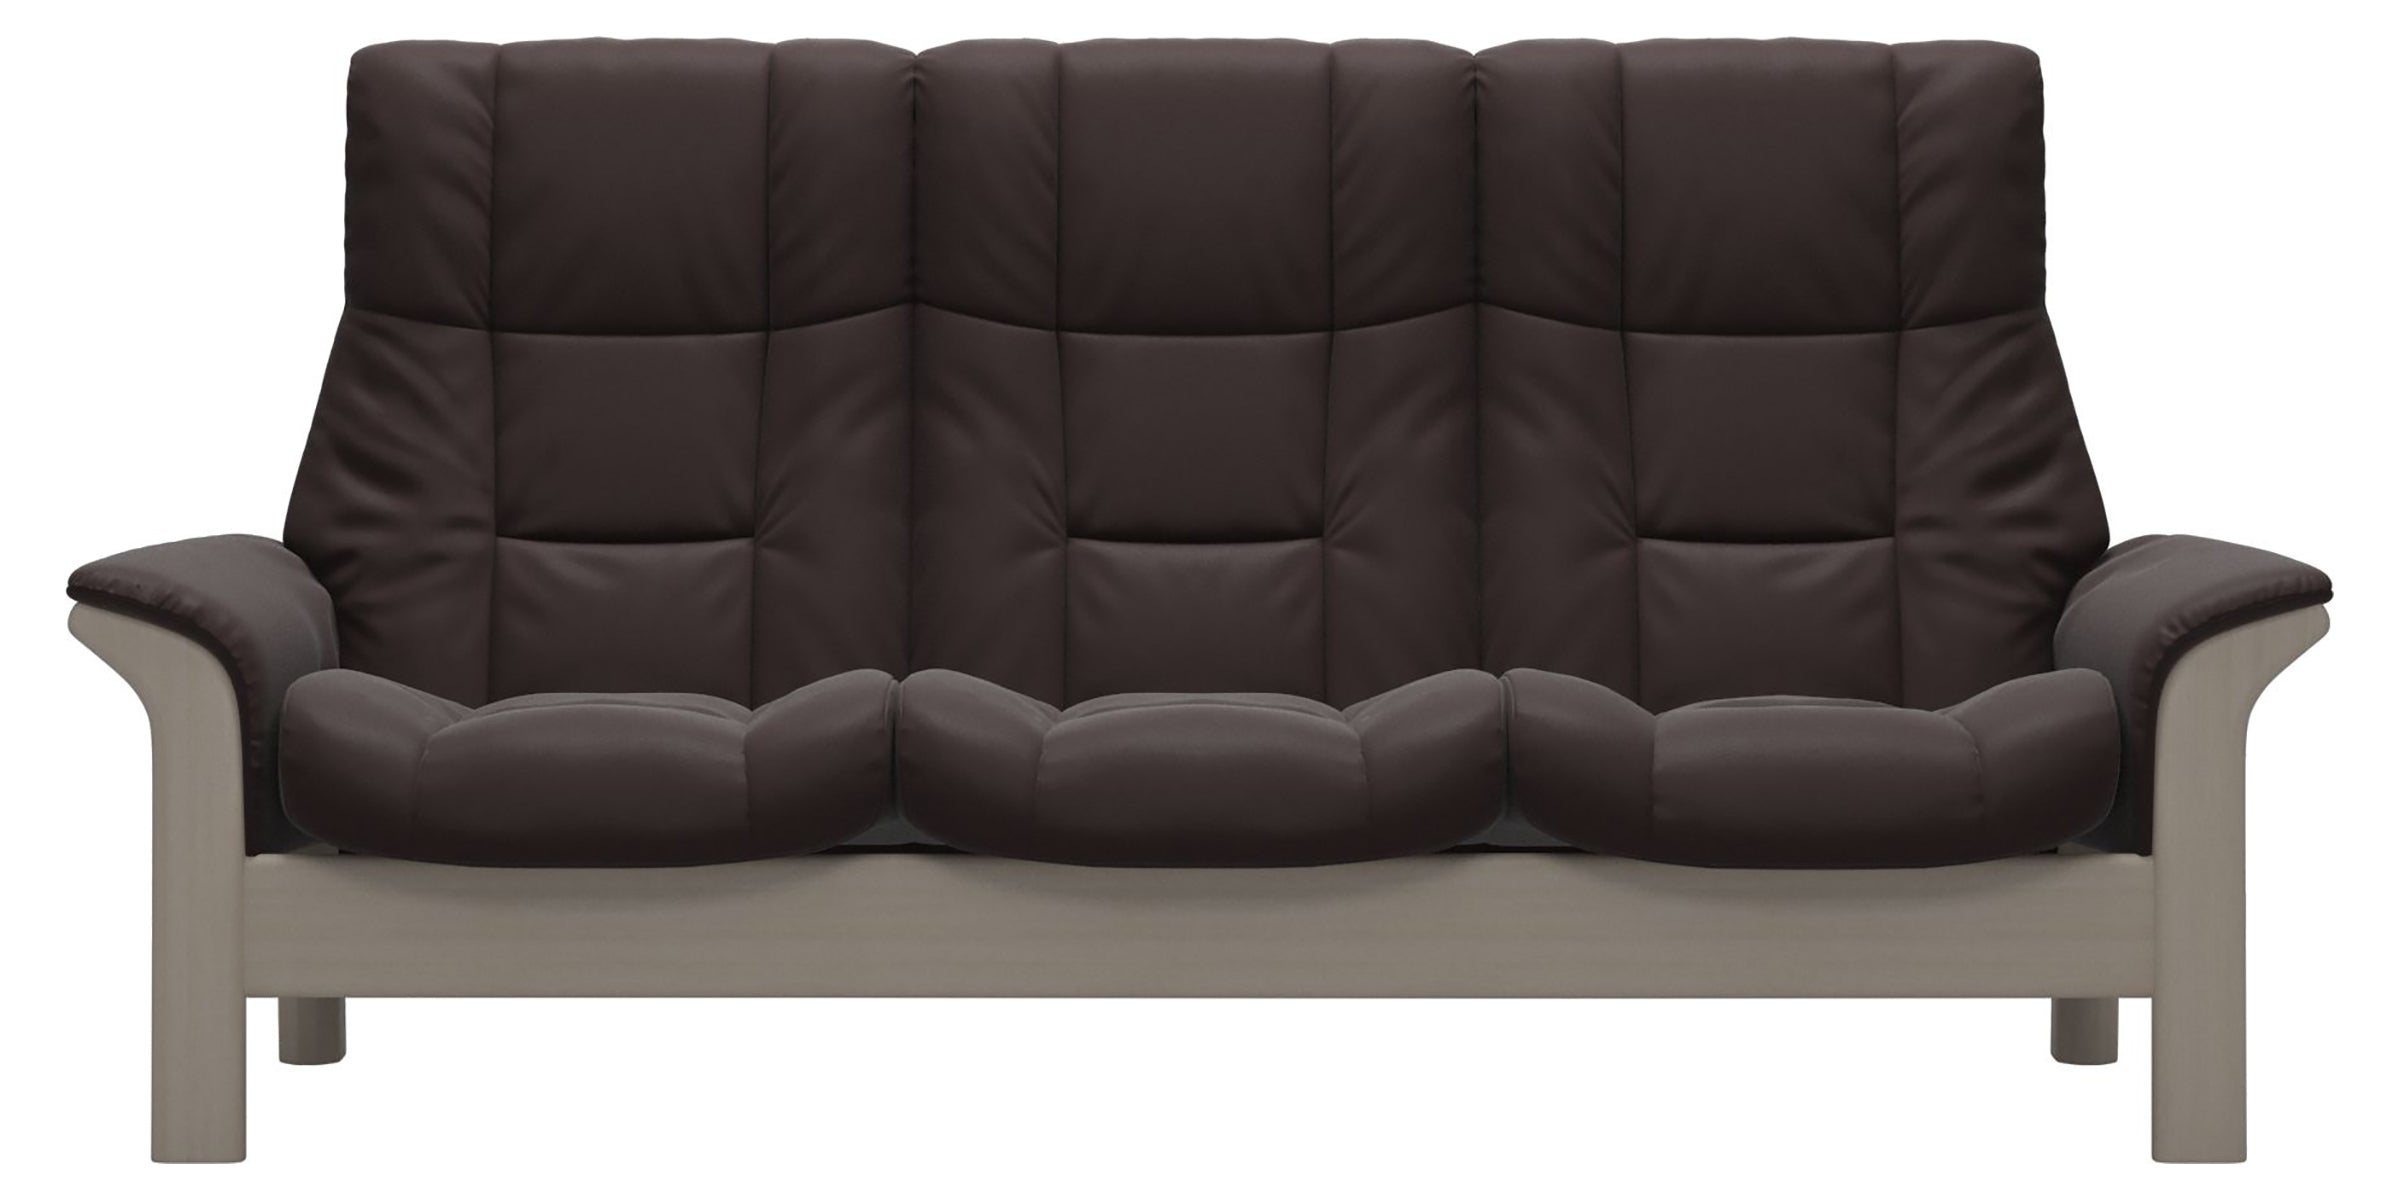 Paloma Leather Chocolate and Whitewash Base | Stressless Windsor 3-Seater High Back Sofa | Valley Ridge Furniture